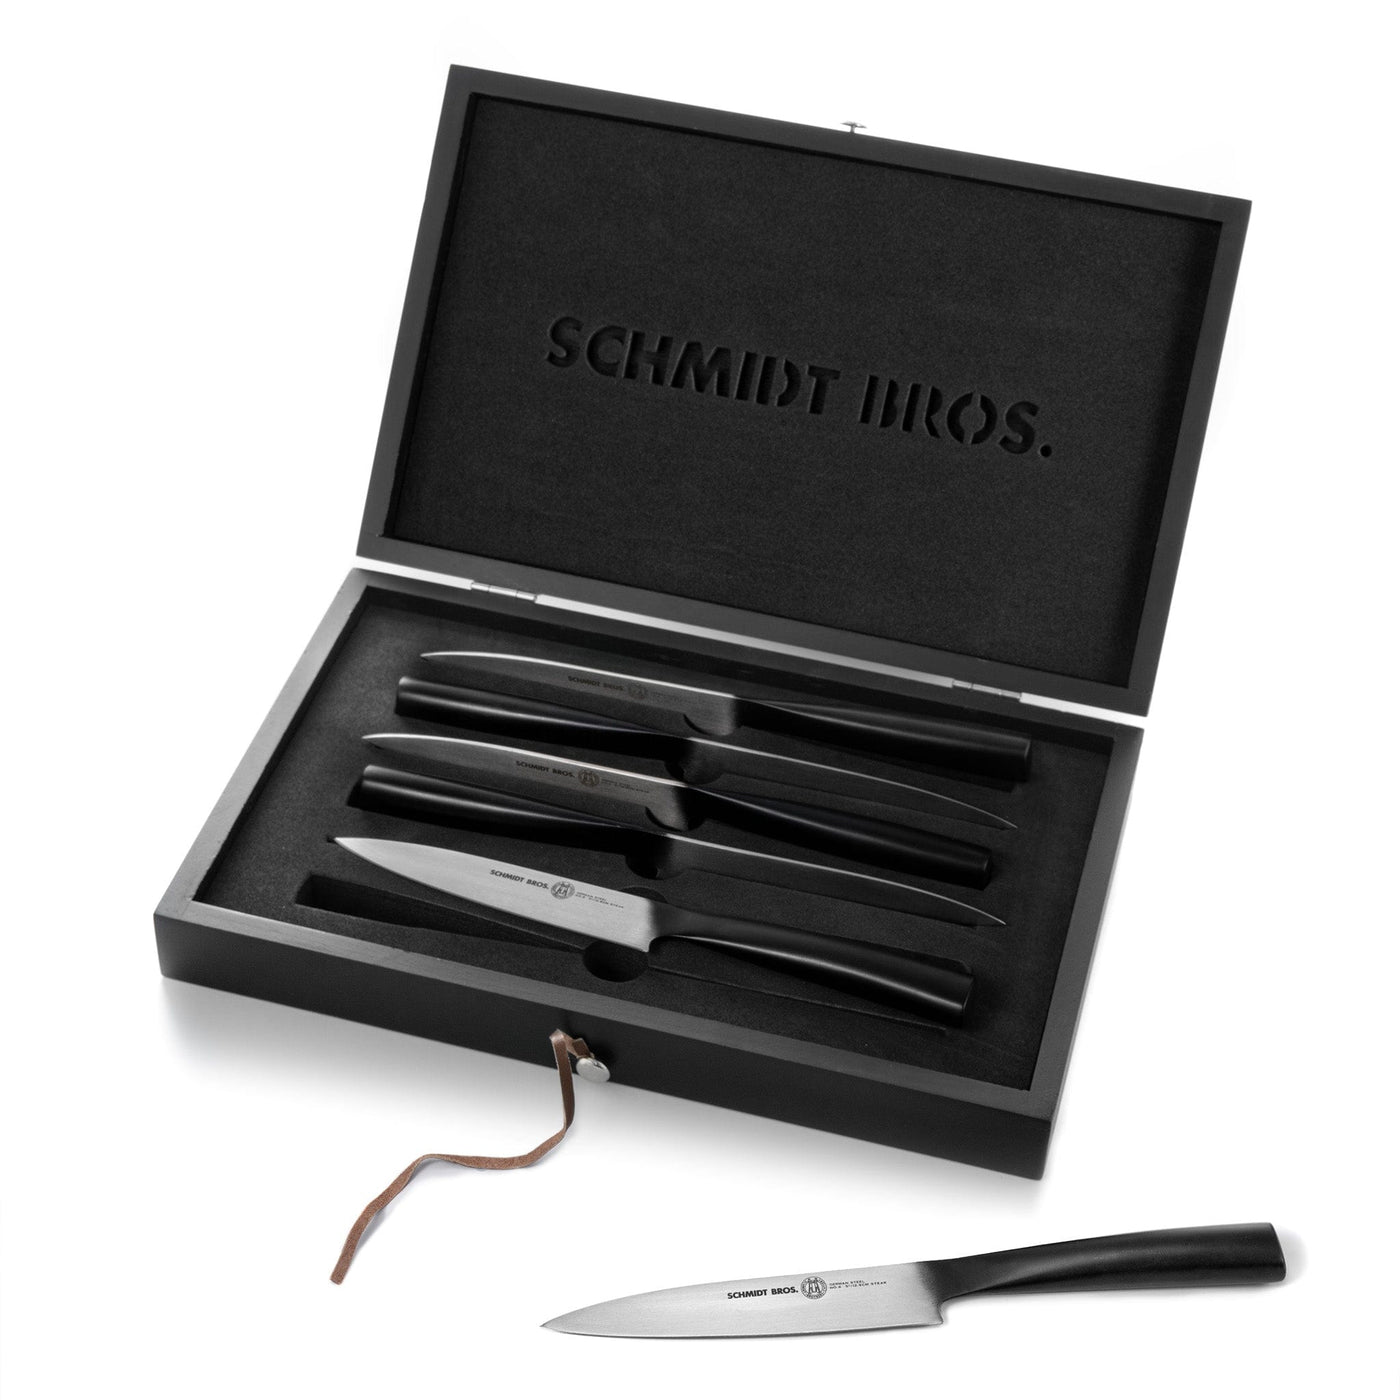 6pcs Stainless Steel Steak Knives Set, Black / 6 Pieces